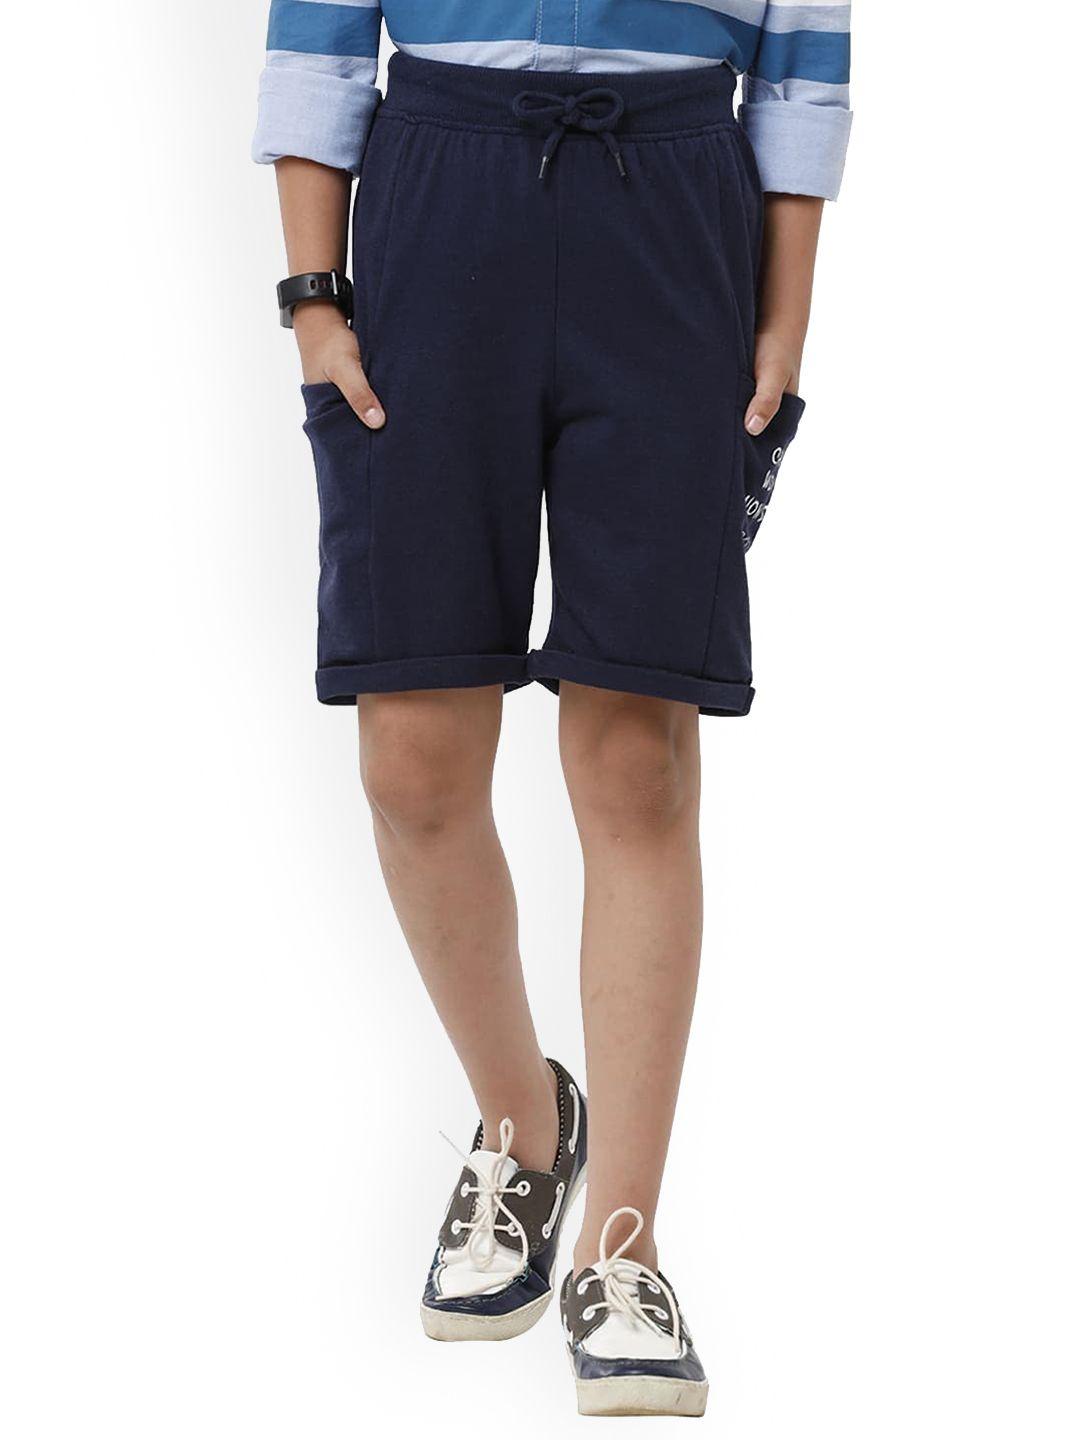 under-fourteen-only-boys-navy-blue-shorts